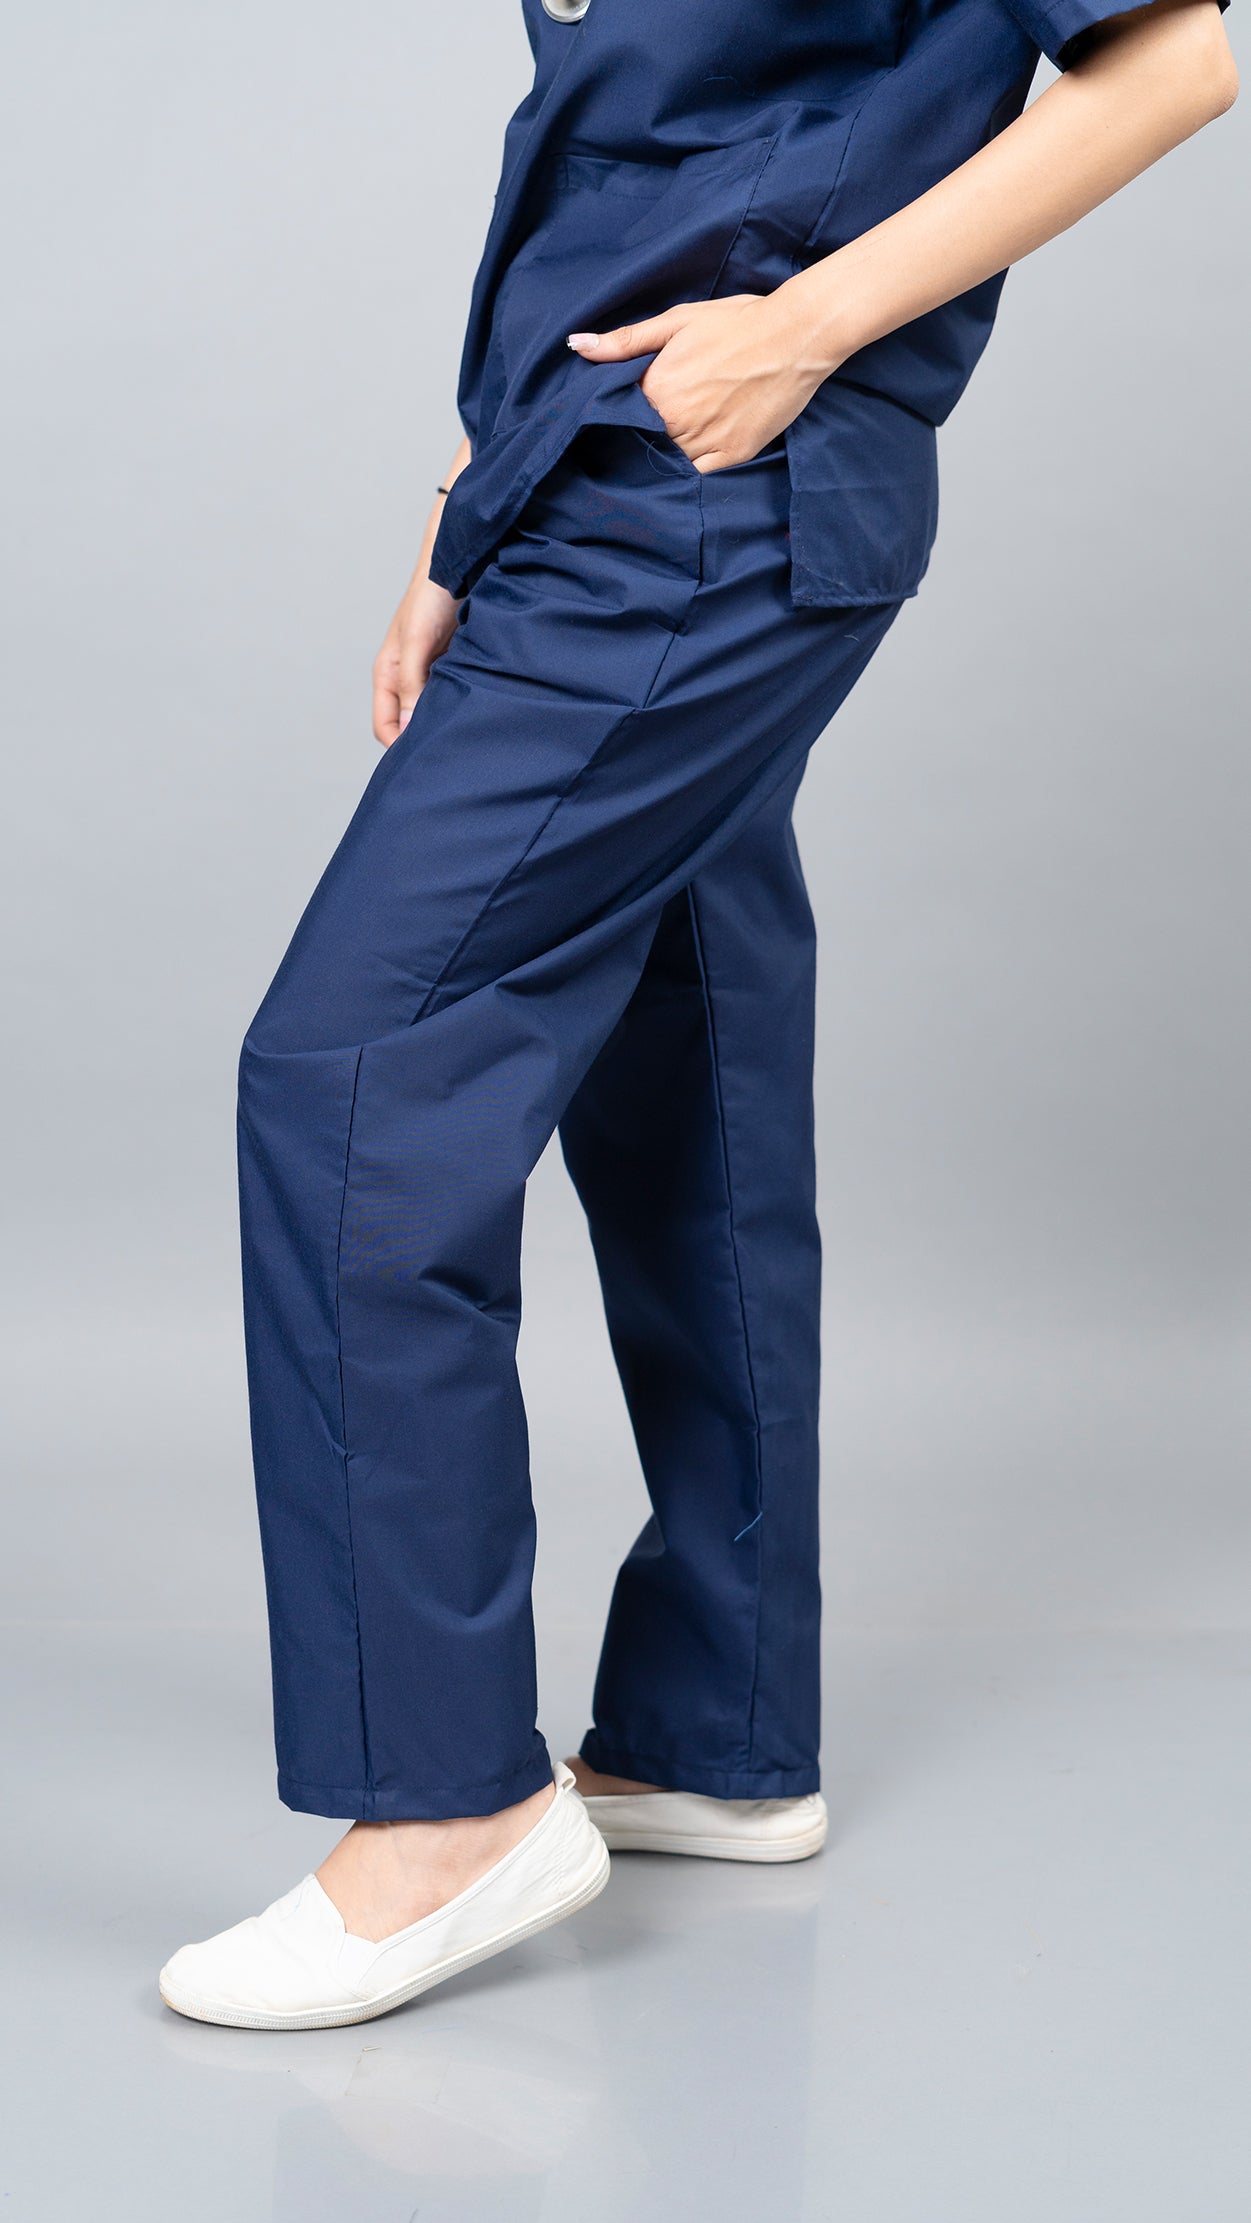 Vastramedwear Basic Medical Scrub Suit for Doctors Women  Blue